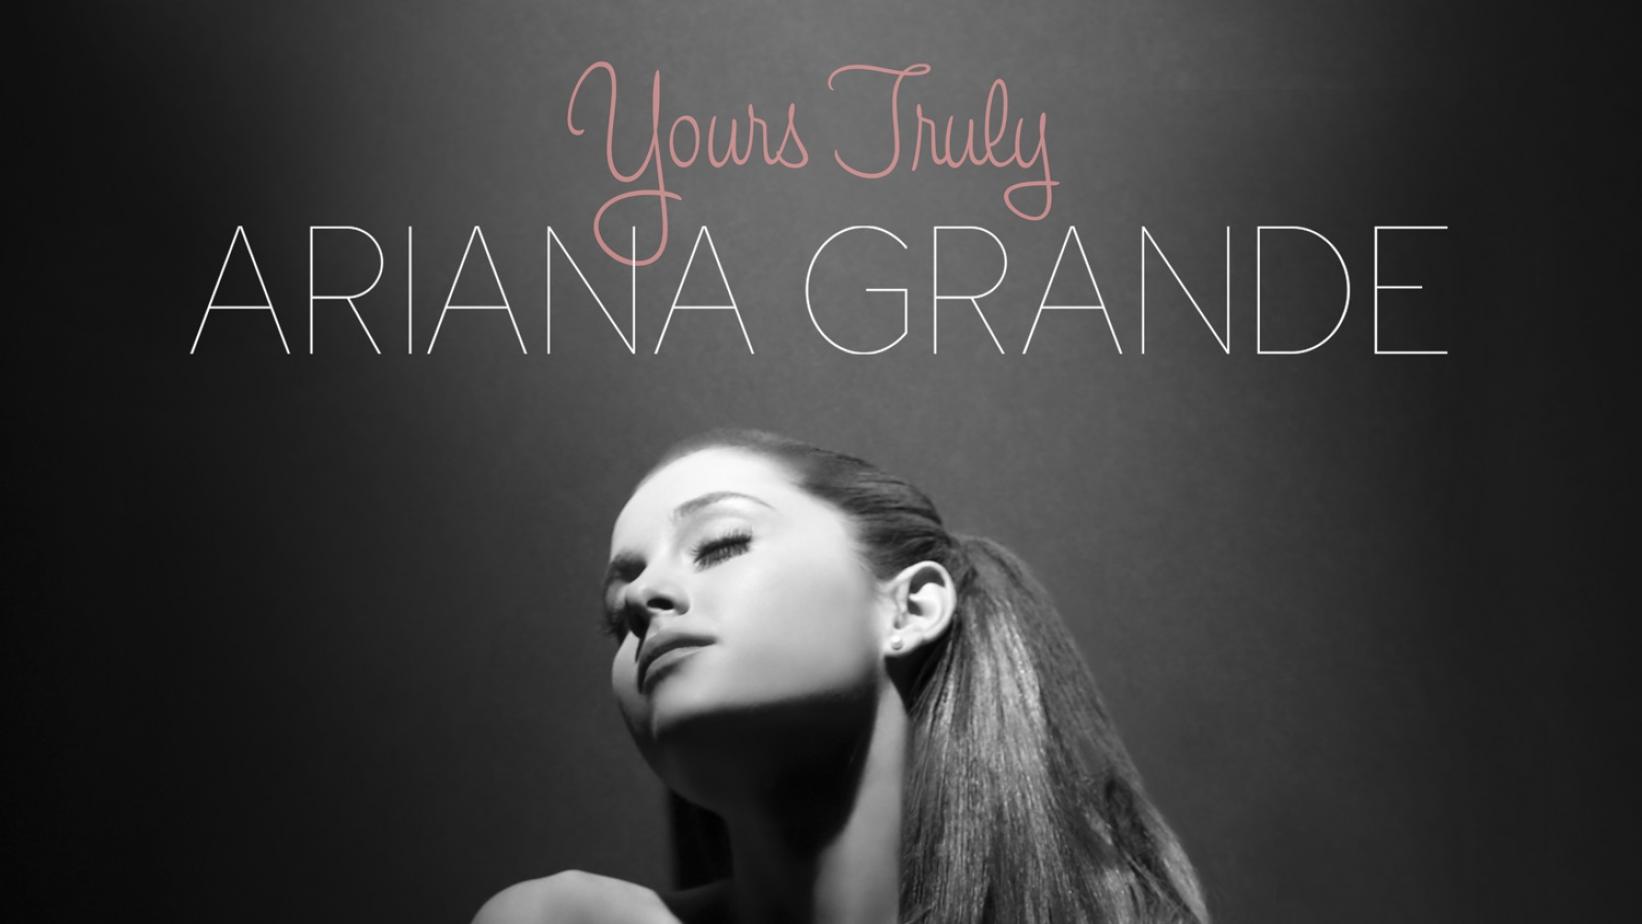 The boy is mine ariana grande перевод. Дебютный альбом Арианы Гранде. Ariana grande "yours truly".